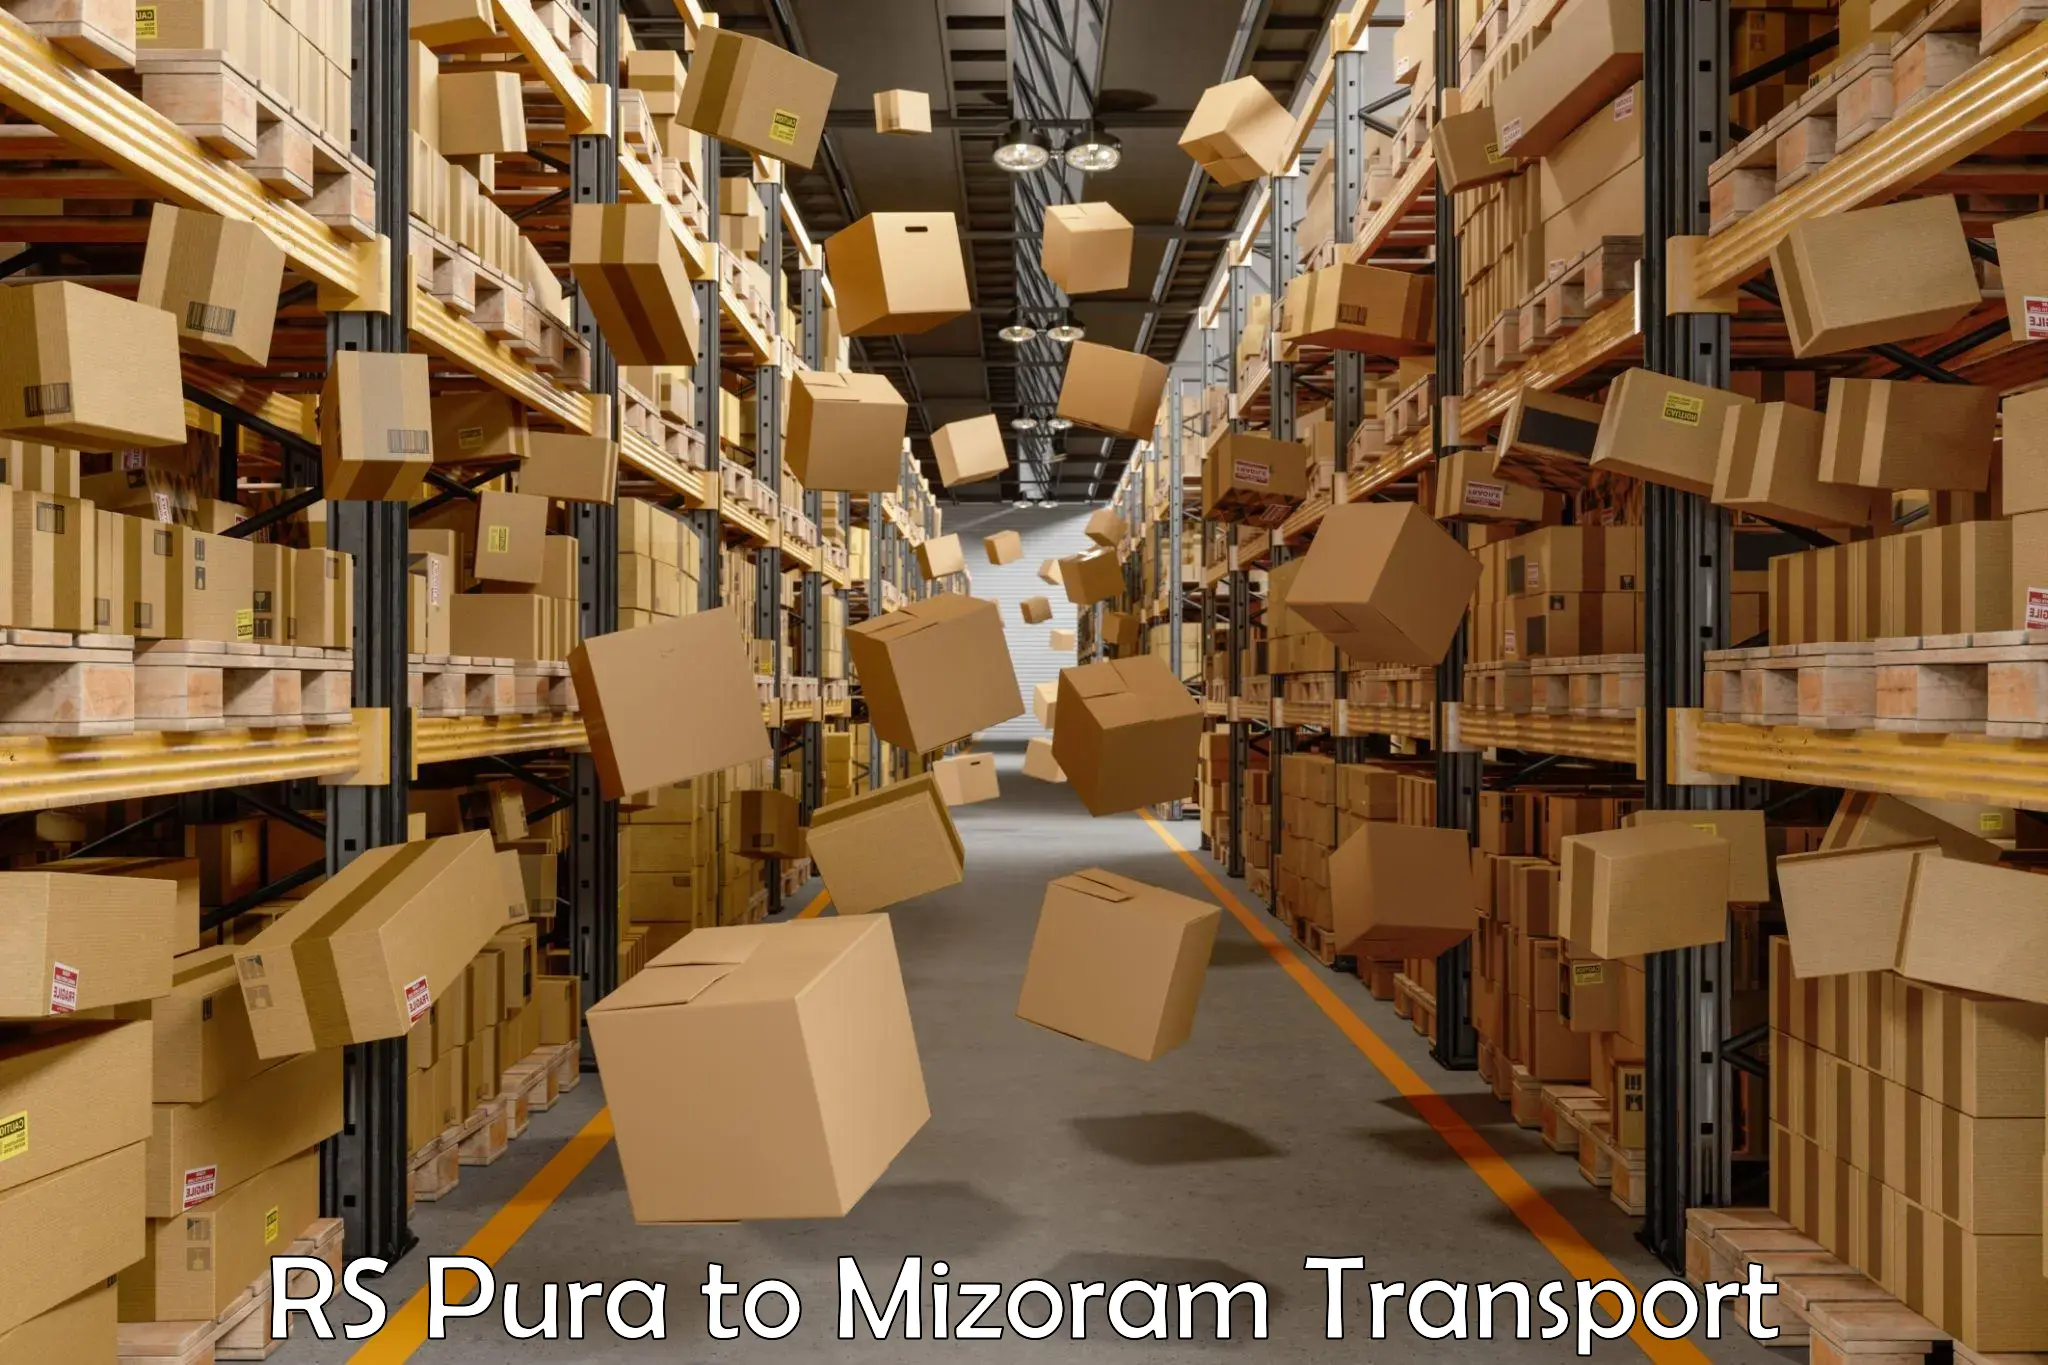 Pick up transport service RS Pura to Mizoram